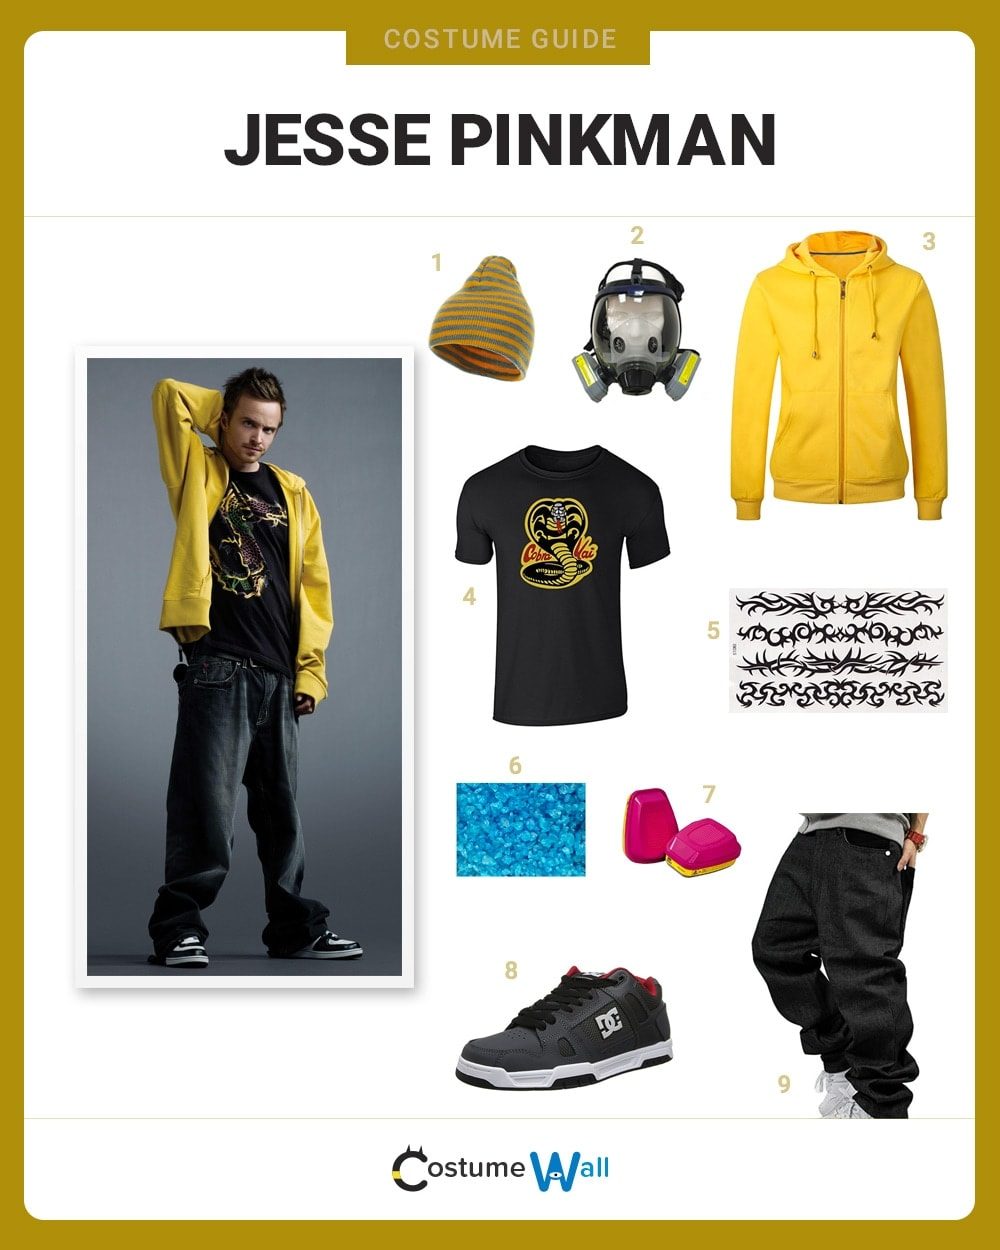 Jesse Pinkman Costume Guide